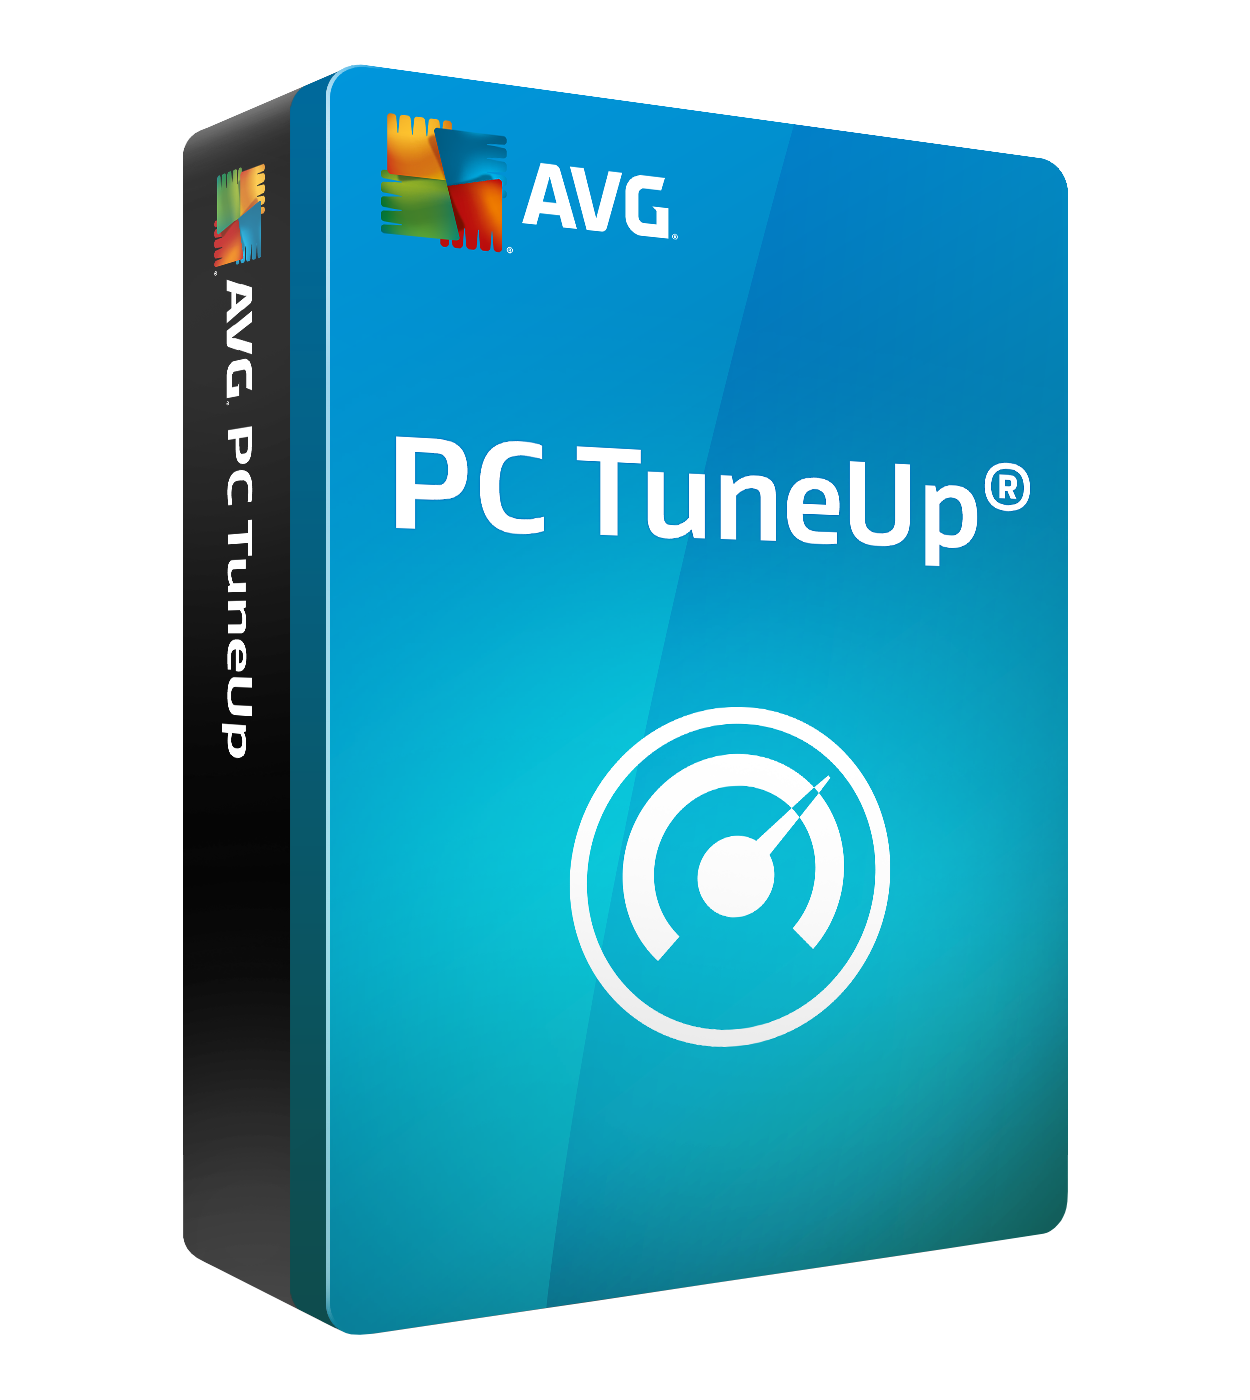 AVG PC TuneUp 1 PC 1 Year